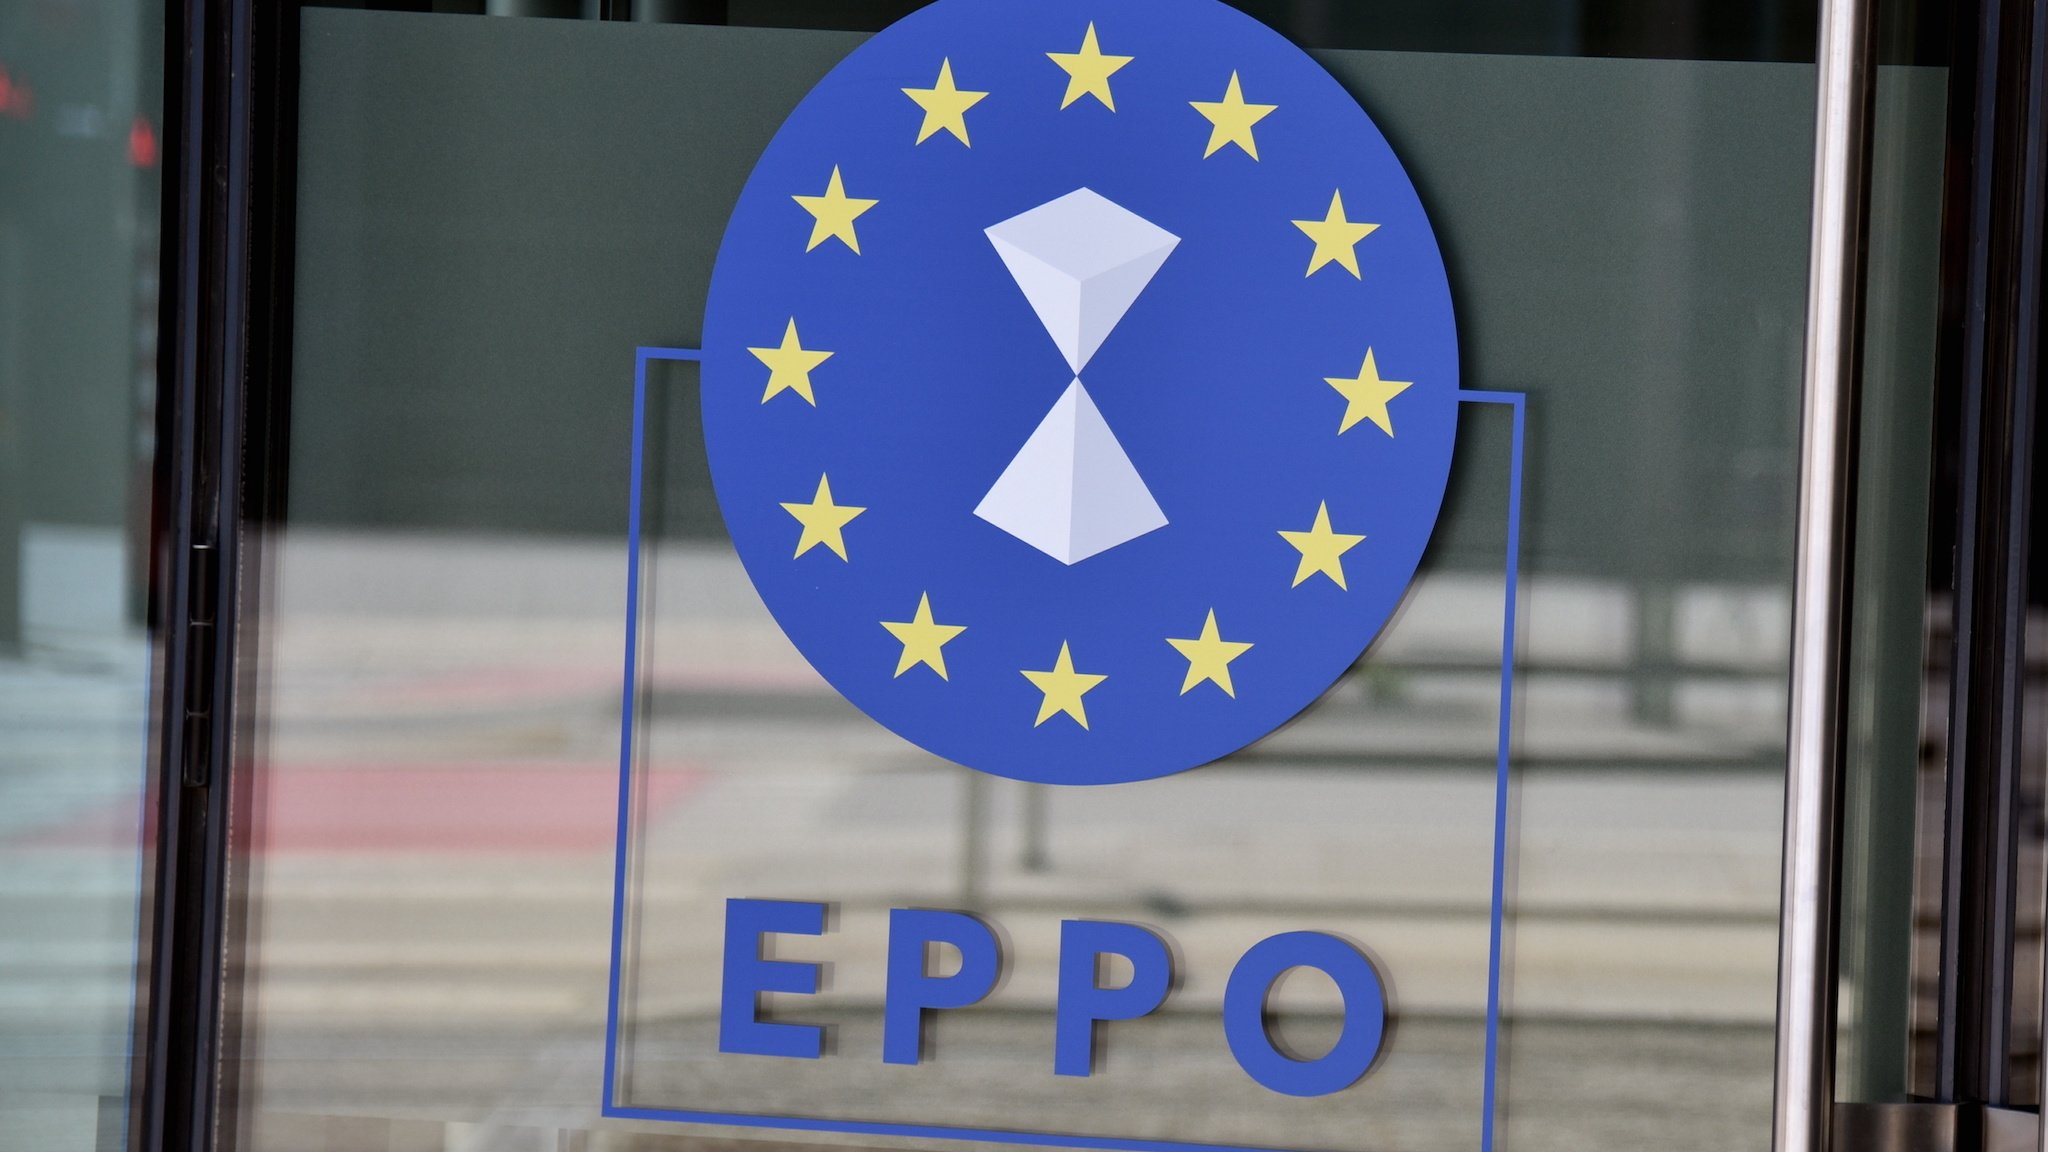 Emblem der Europäischen Staatsanwaltschaft, EuStA, englisch European Public Prosecutors Office, EPPO